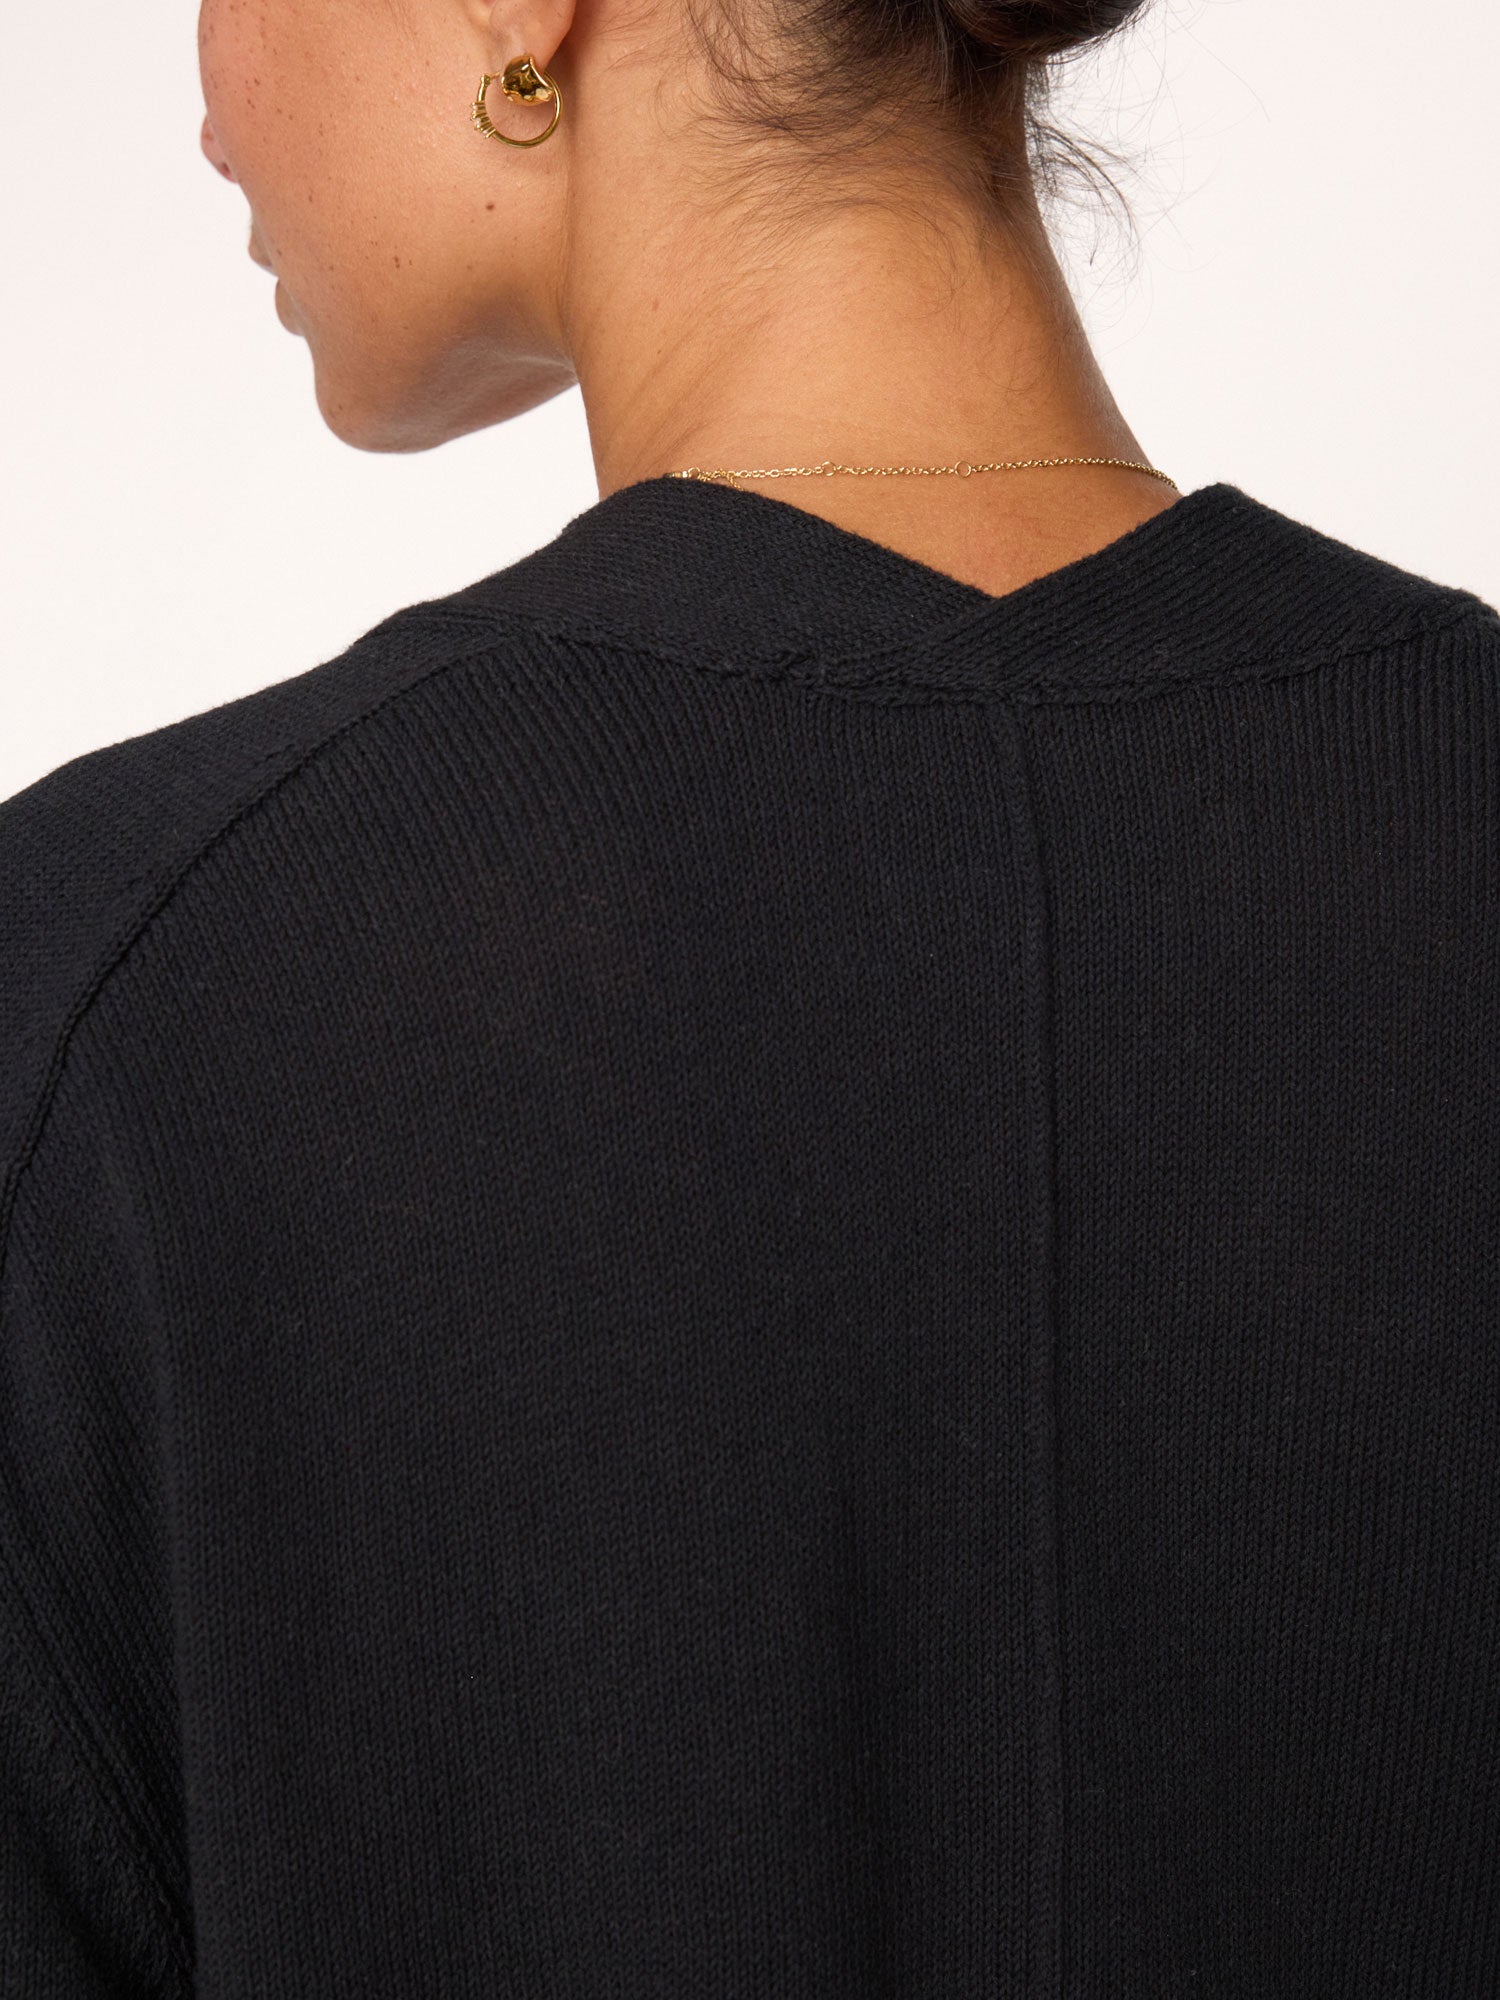 Imogen V-neck cotton black sweater close up